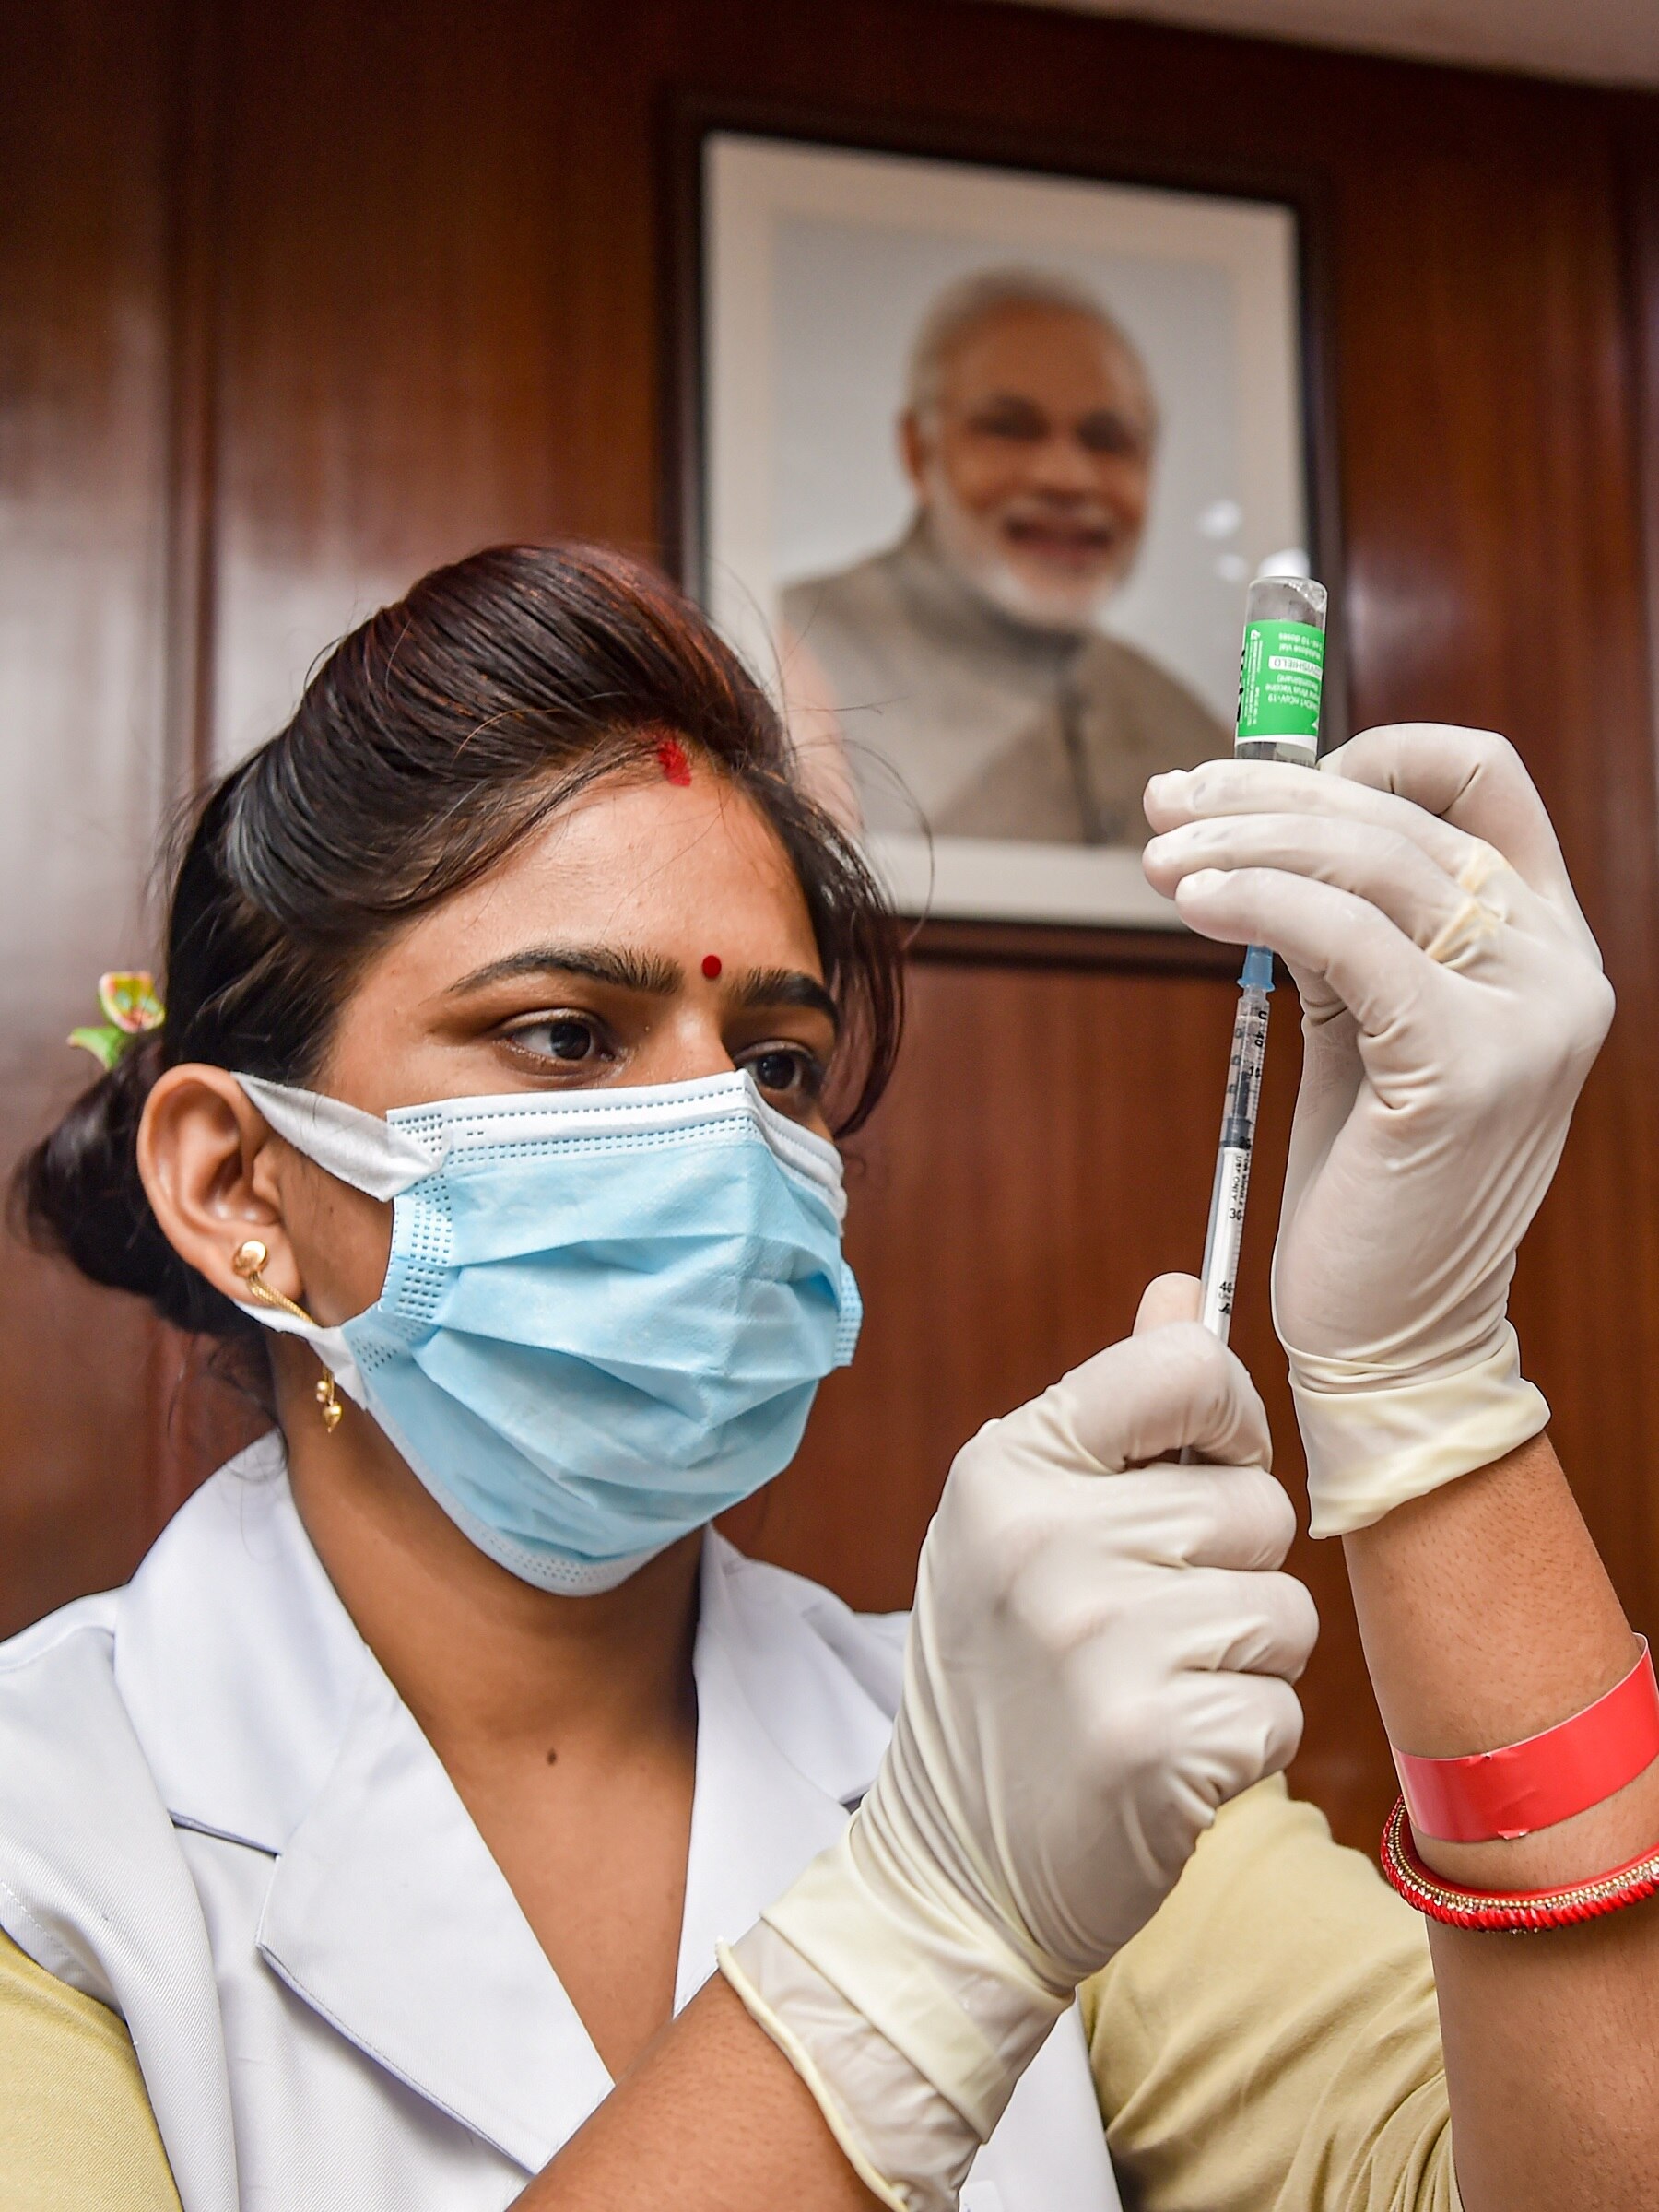 Corona Vaccine: ભારતમાં ટૂંક સમયમાં આવશે કોરોનાની નેકસ્ટ જનરેશન વેક્સિન, જાણો શું છે ખાસિયતો